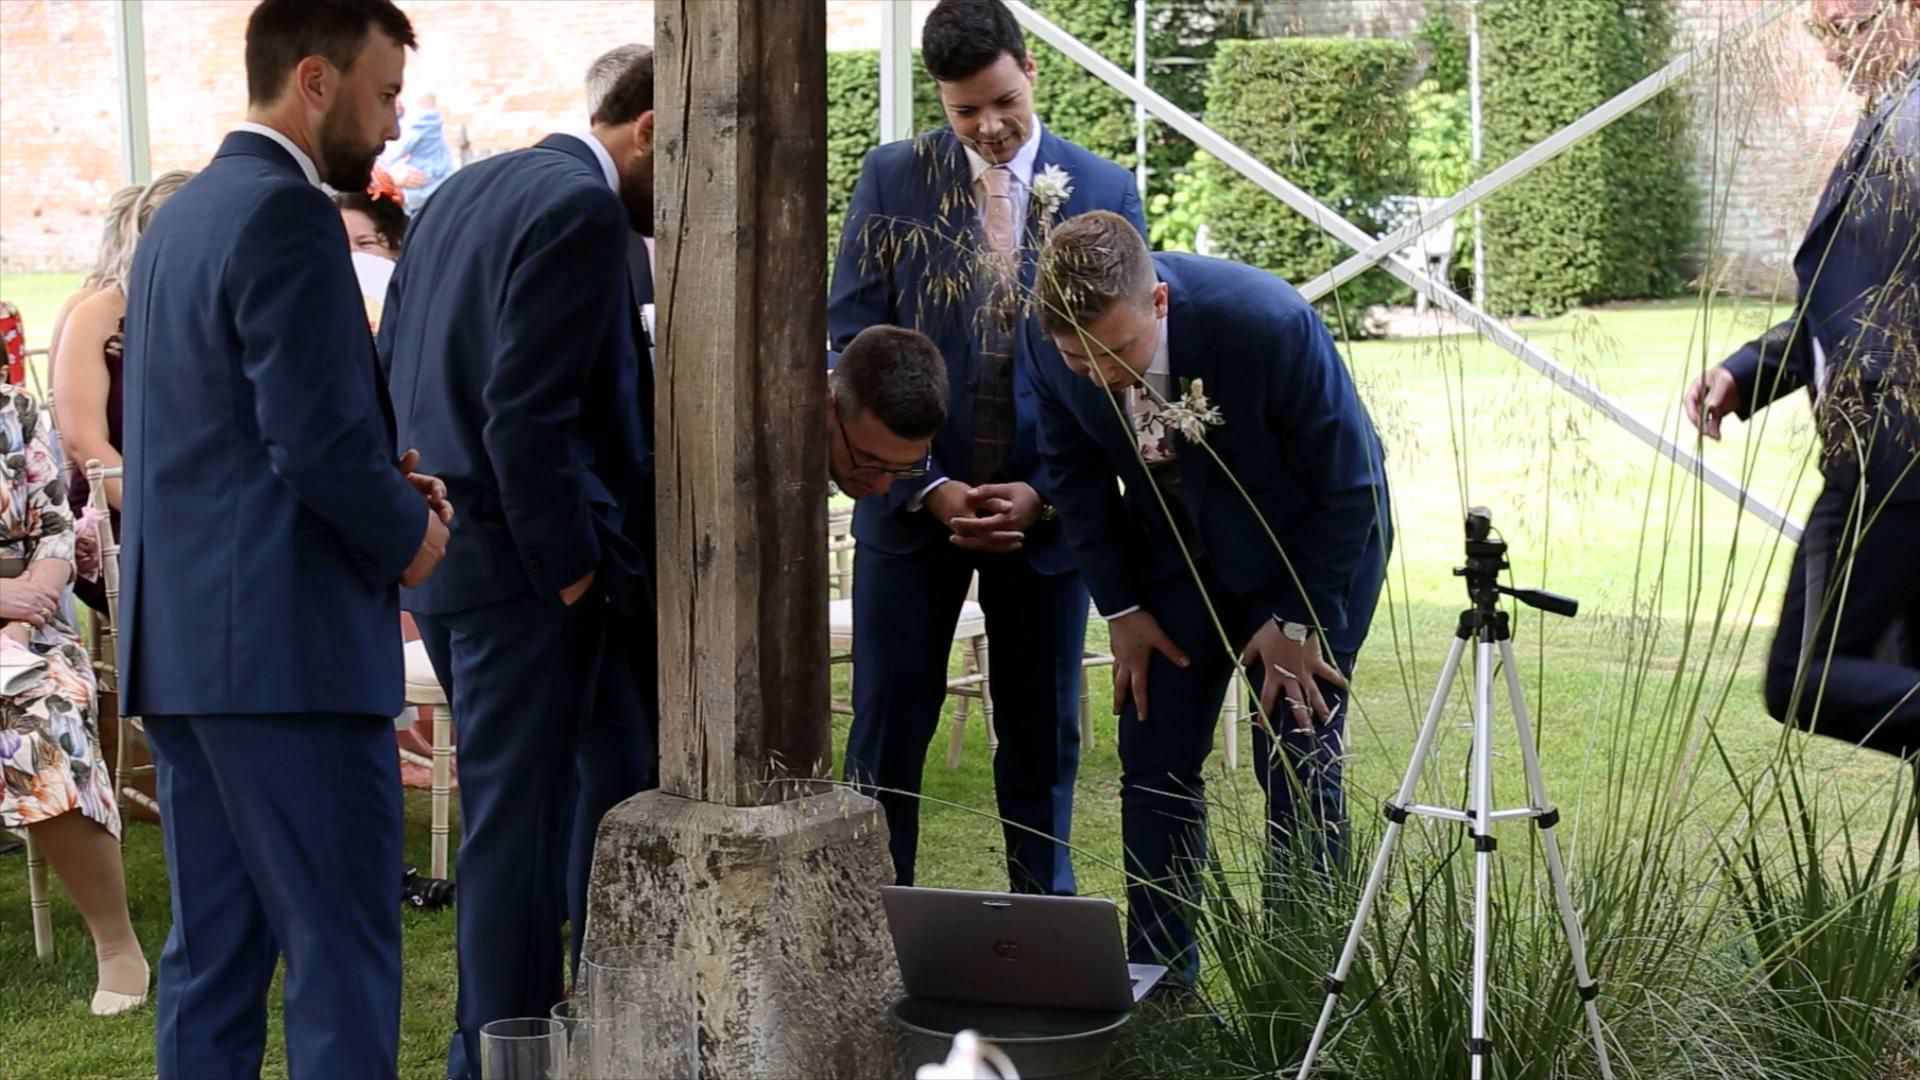 groomsman set up zoom link during outdoor ceremony